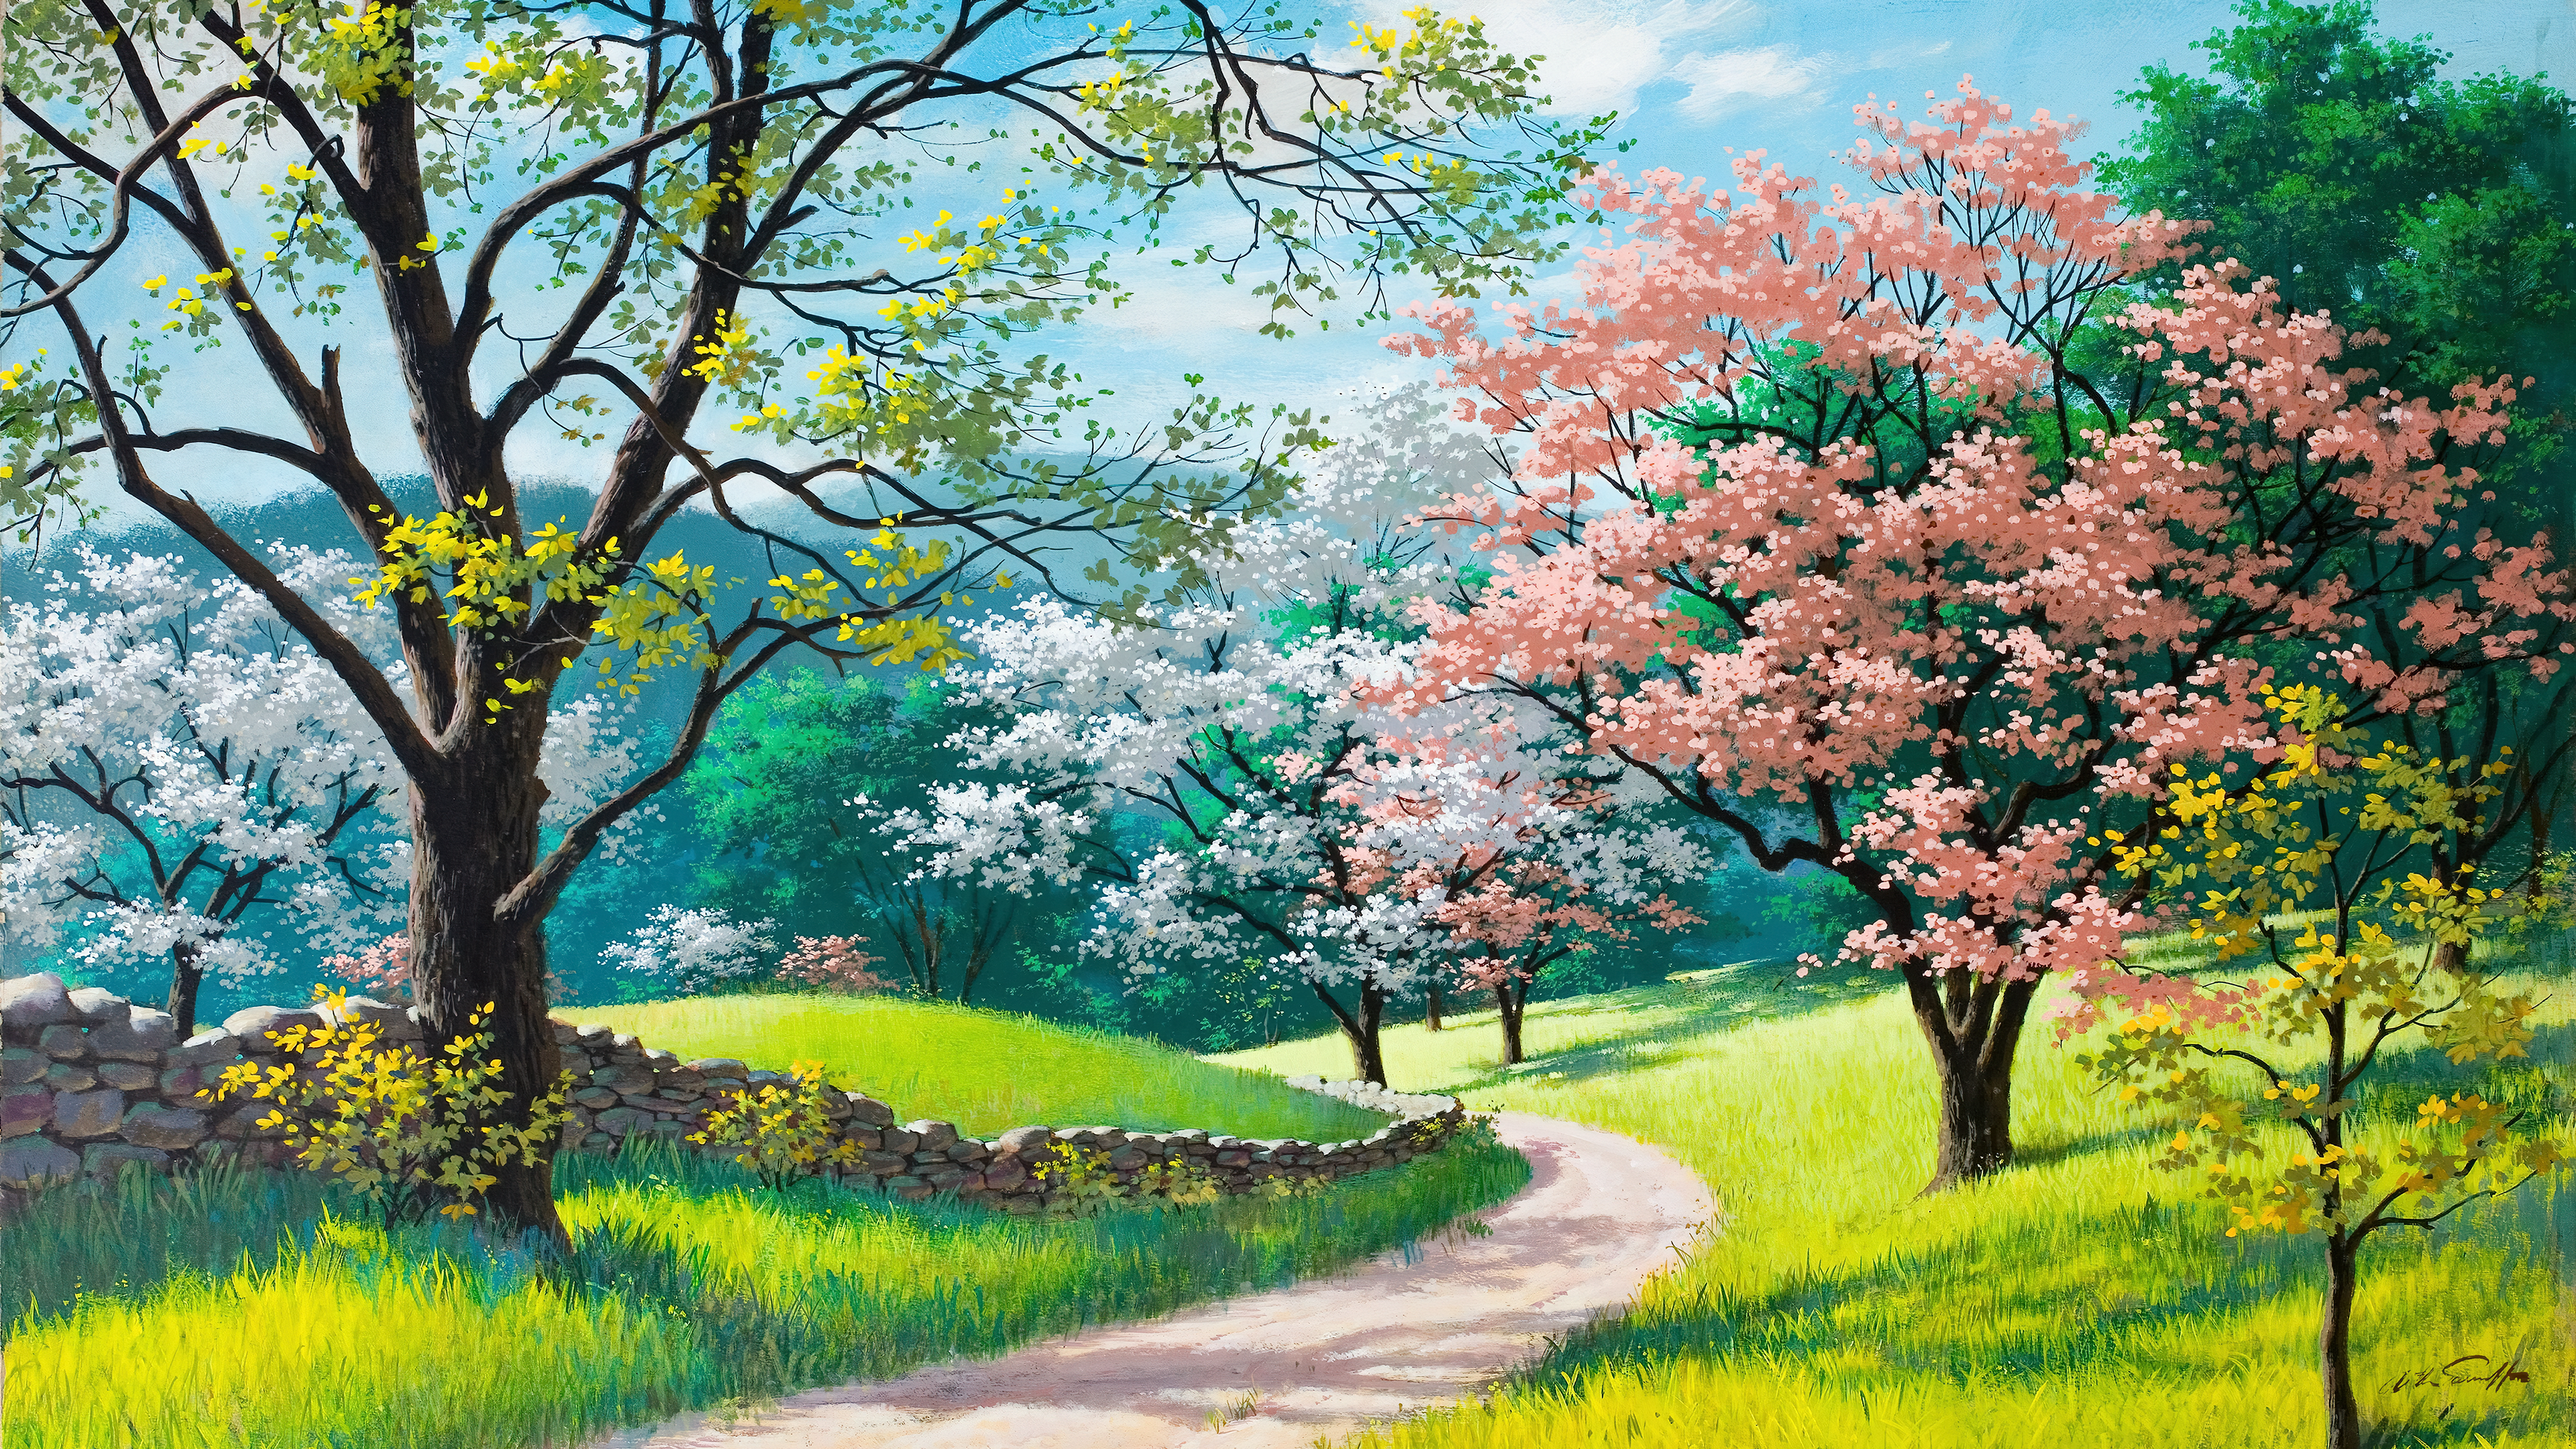 General 3840x2160 digital art fantasy art nature blossoms trees dirt road field branch spring path grass